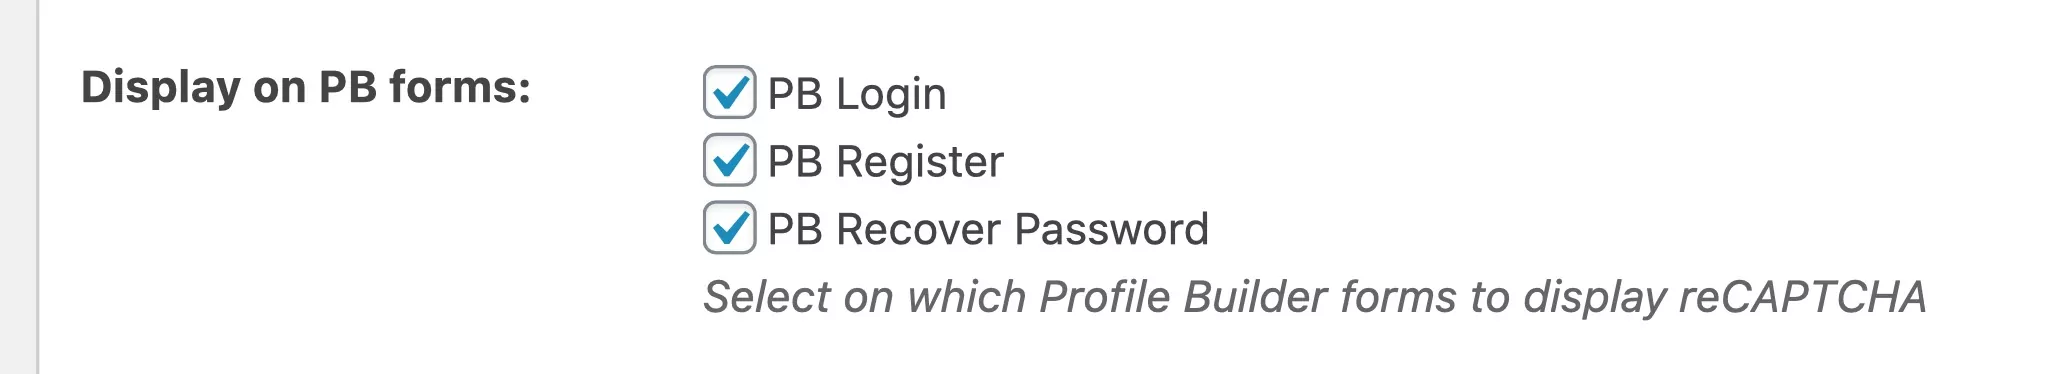 check the PB login option for ReCaptcha